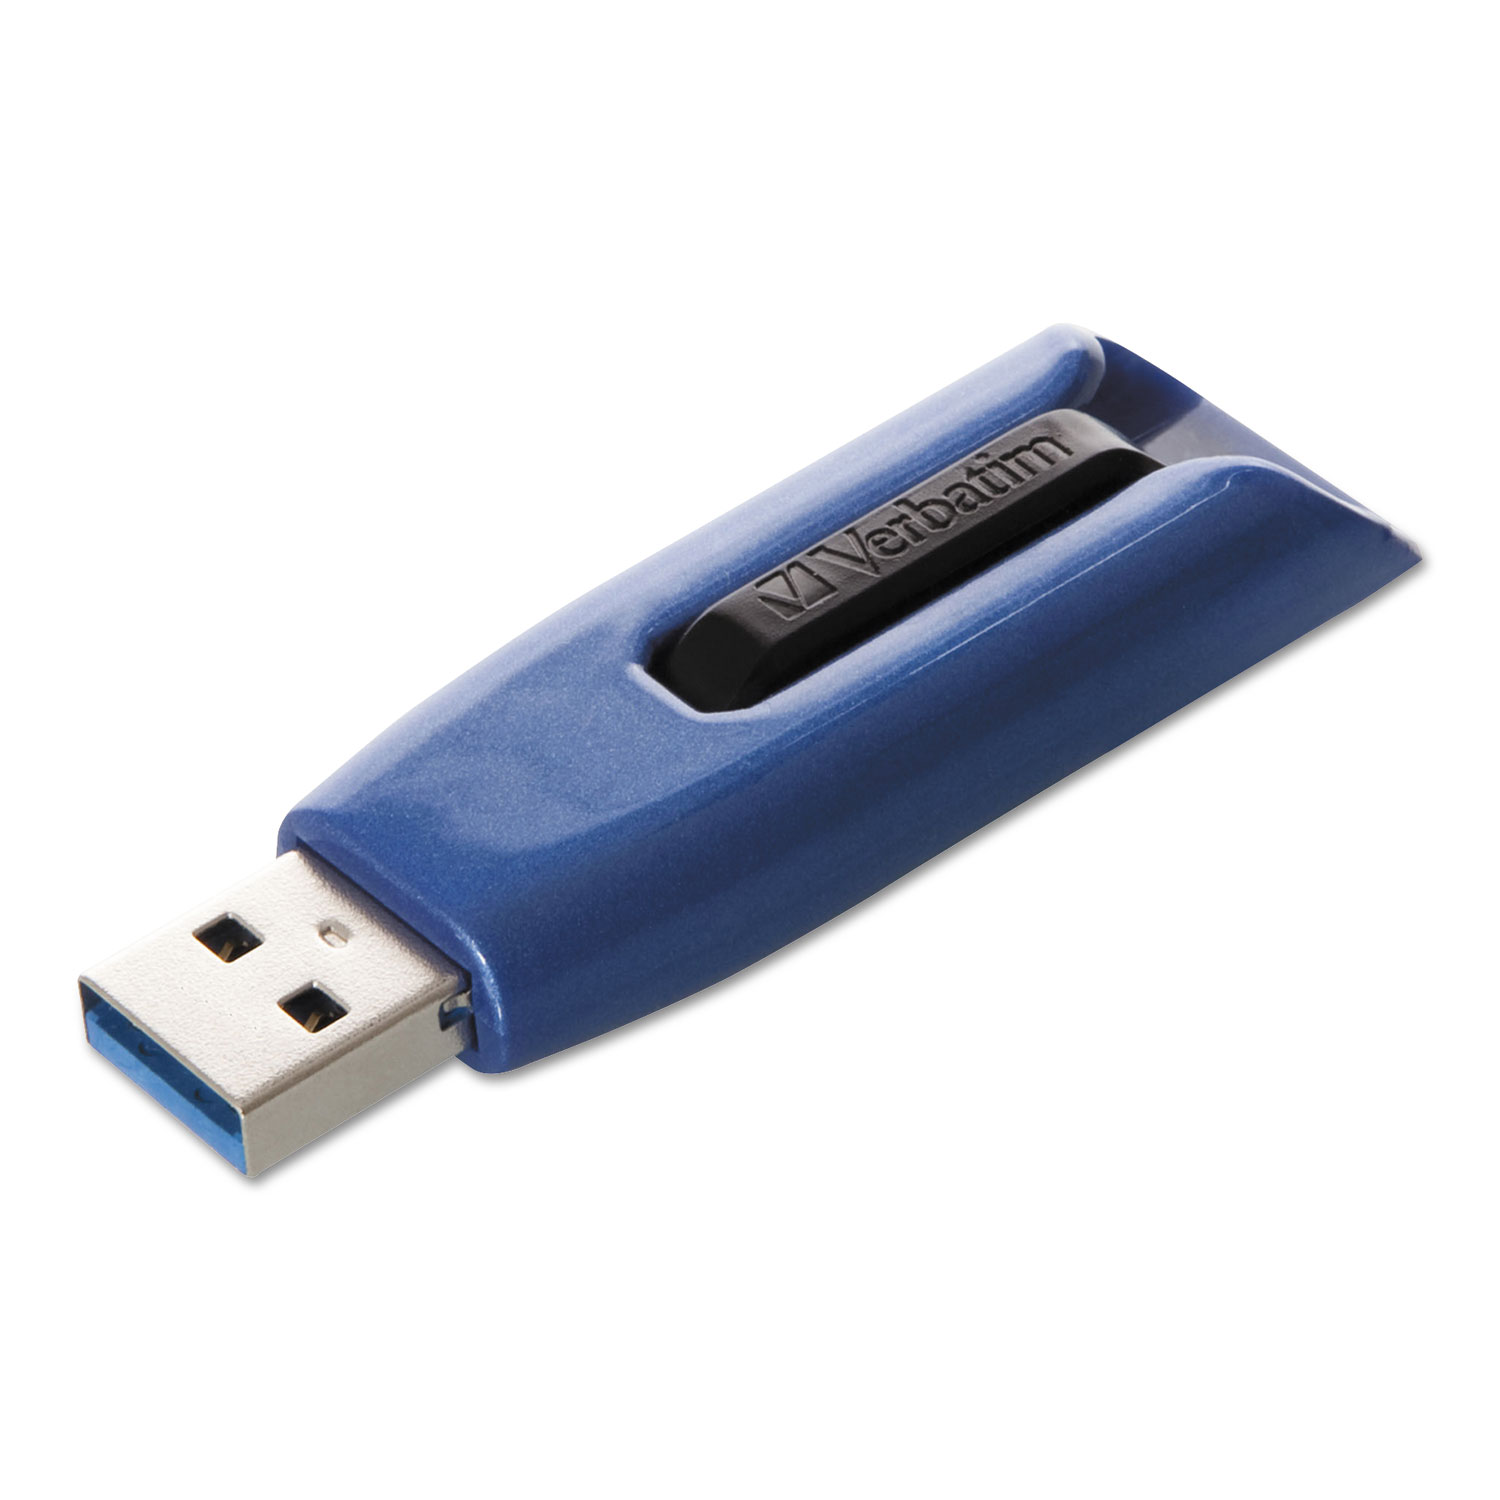 V3 Max USB 3.0 Flash Drive, 256GB, Blue